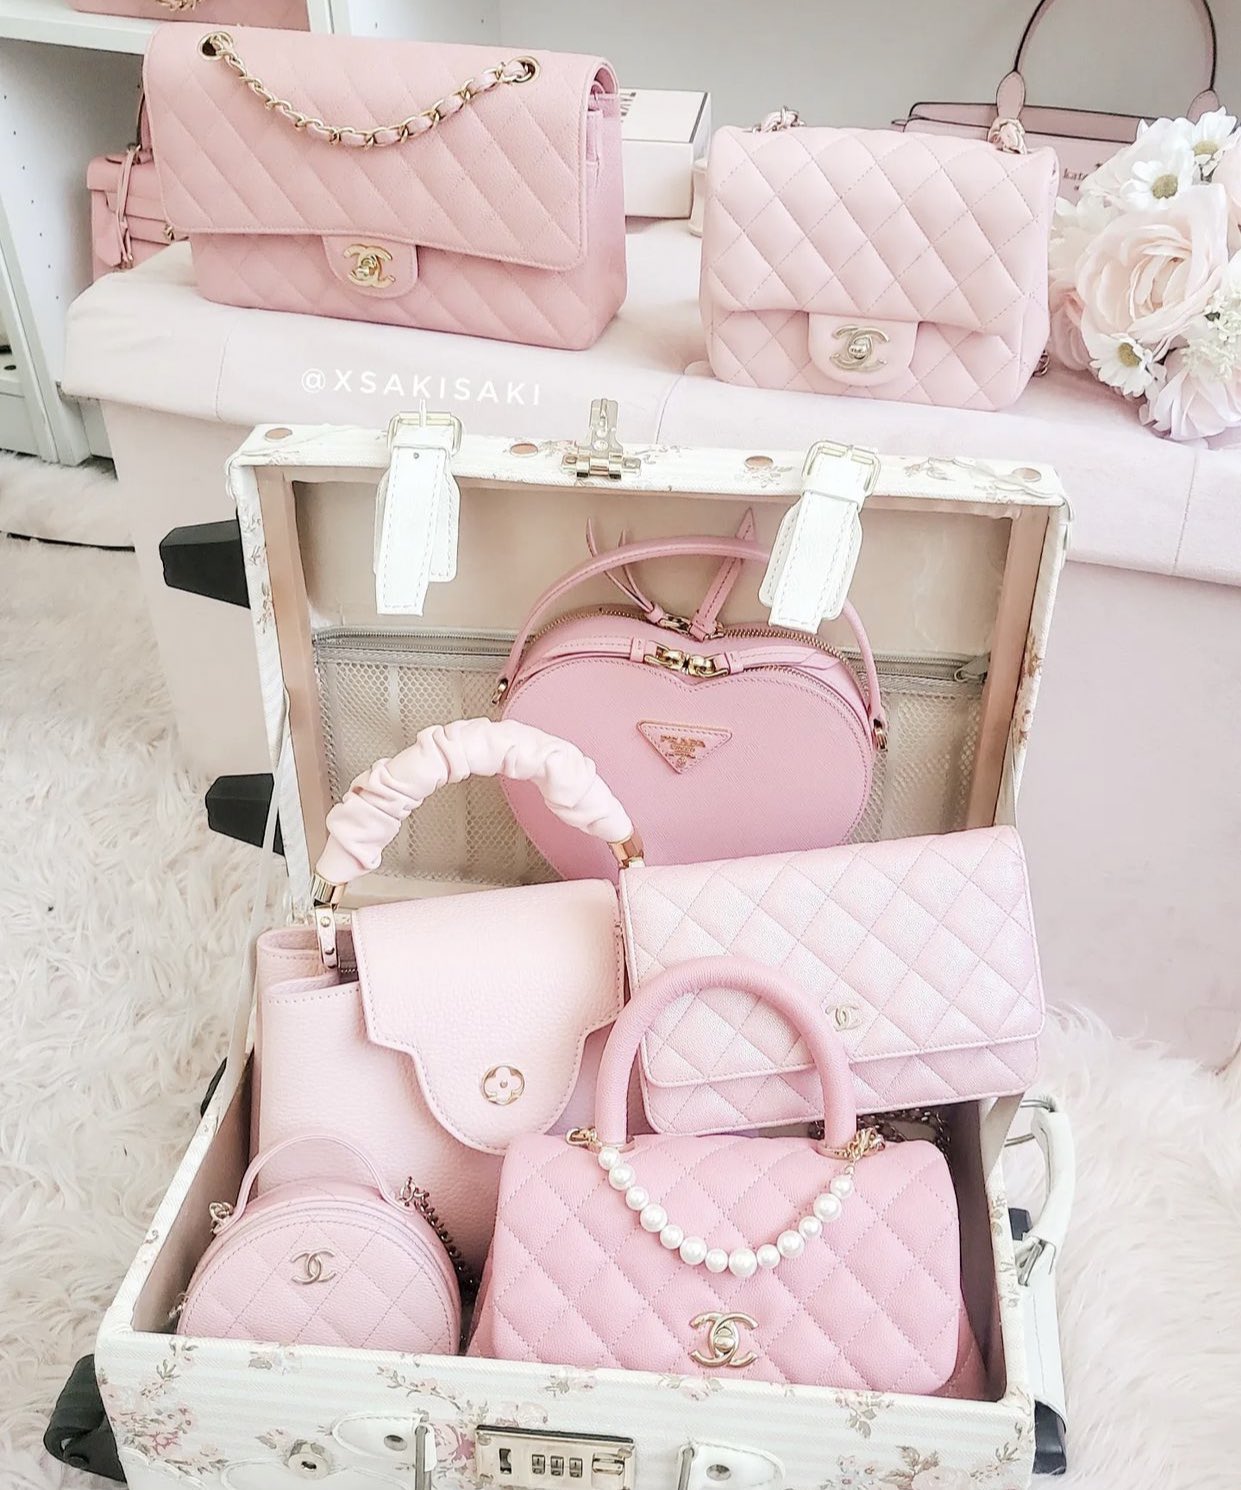 Handbags Pu Leather Ladies Baby Pink Handbag at Rs 300/piece in New Delhi |  ID: 23176368991